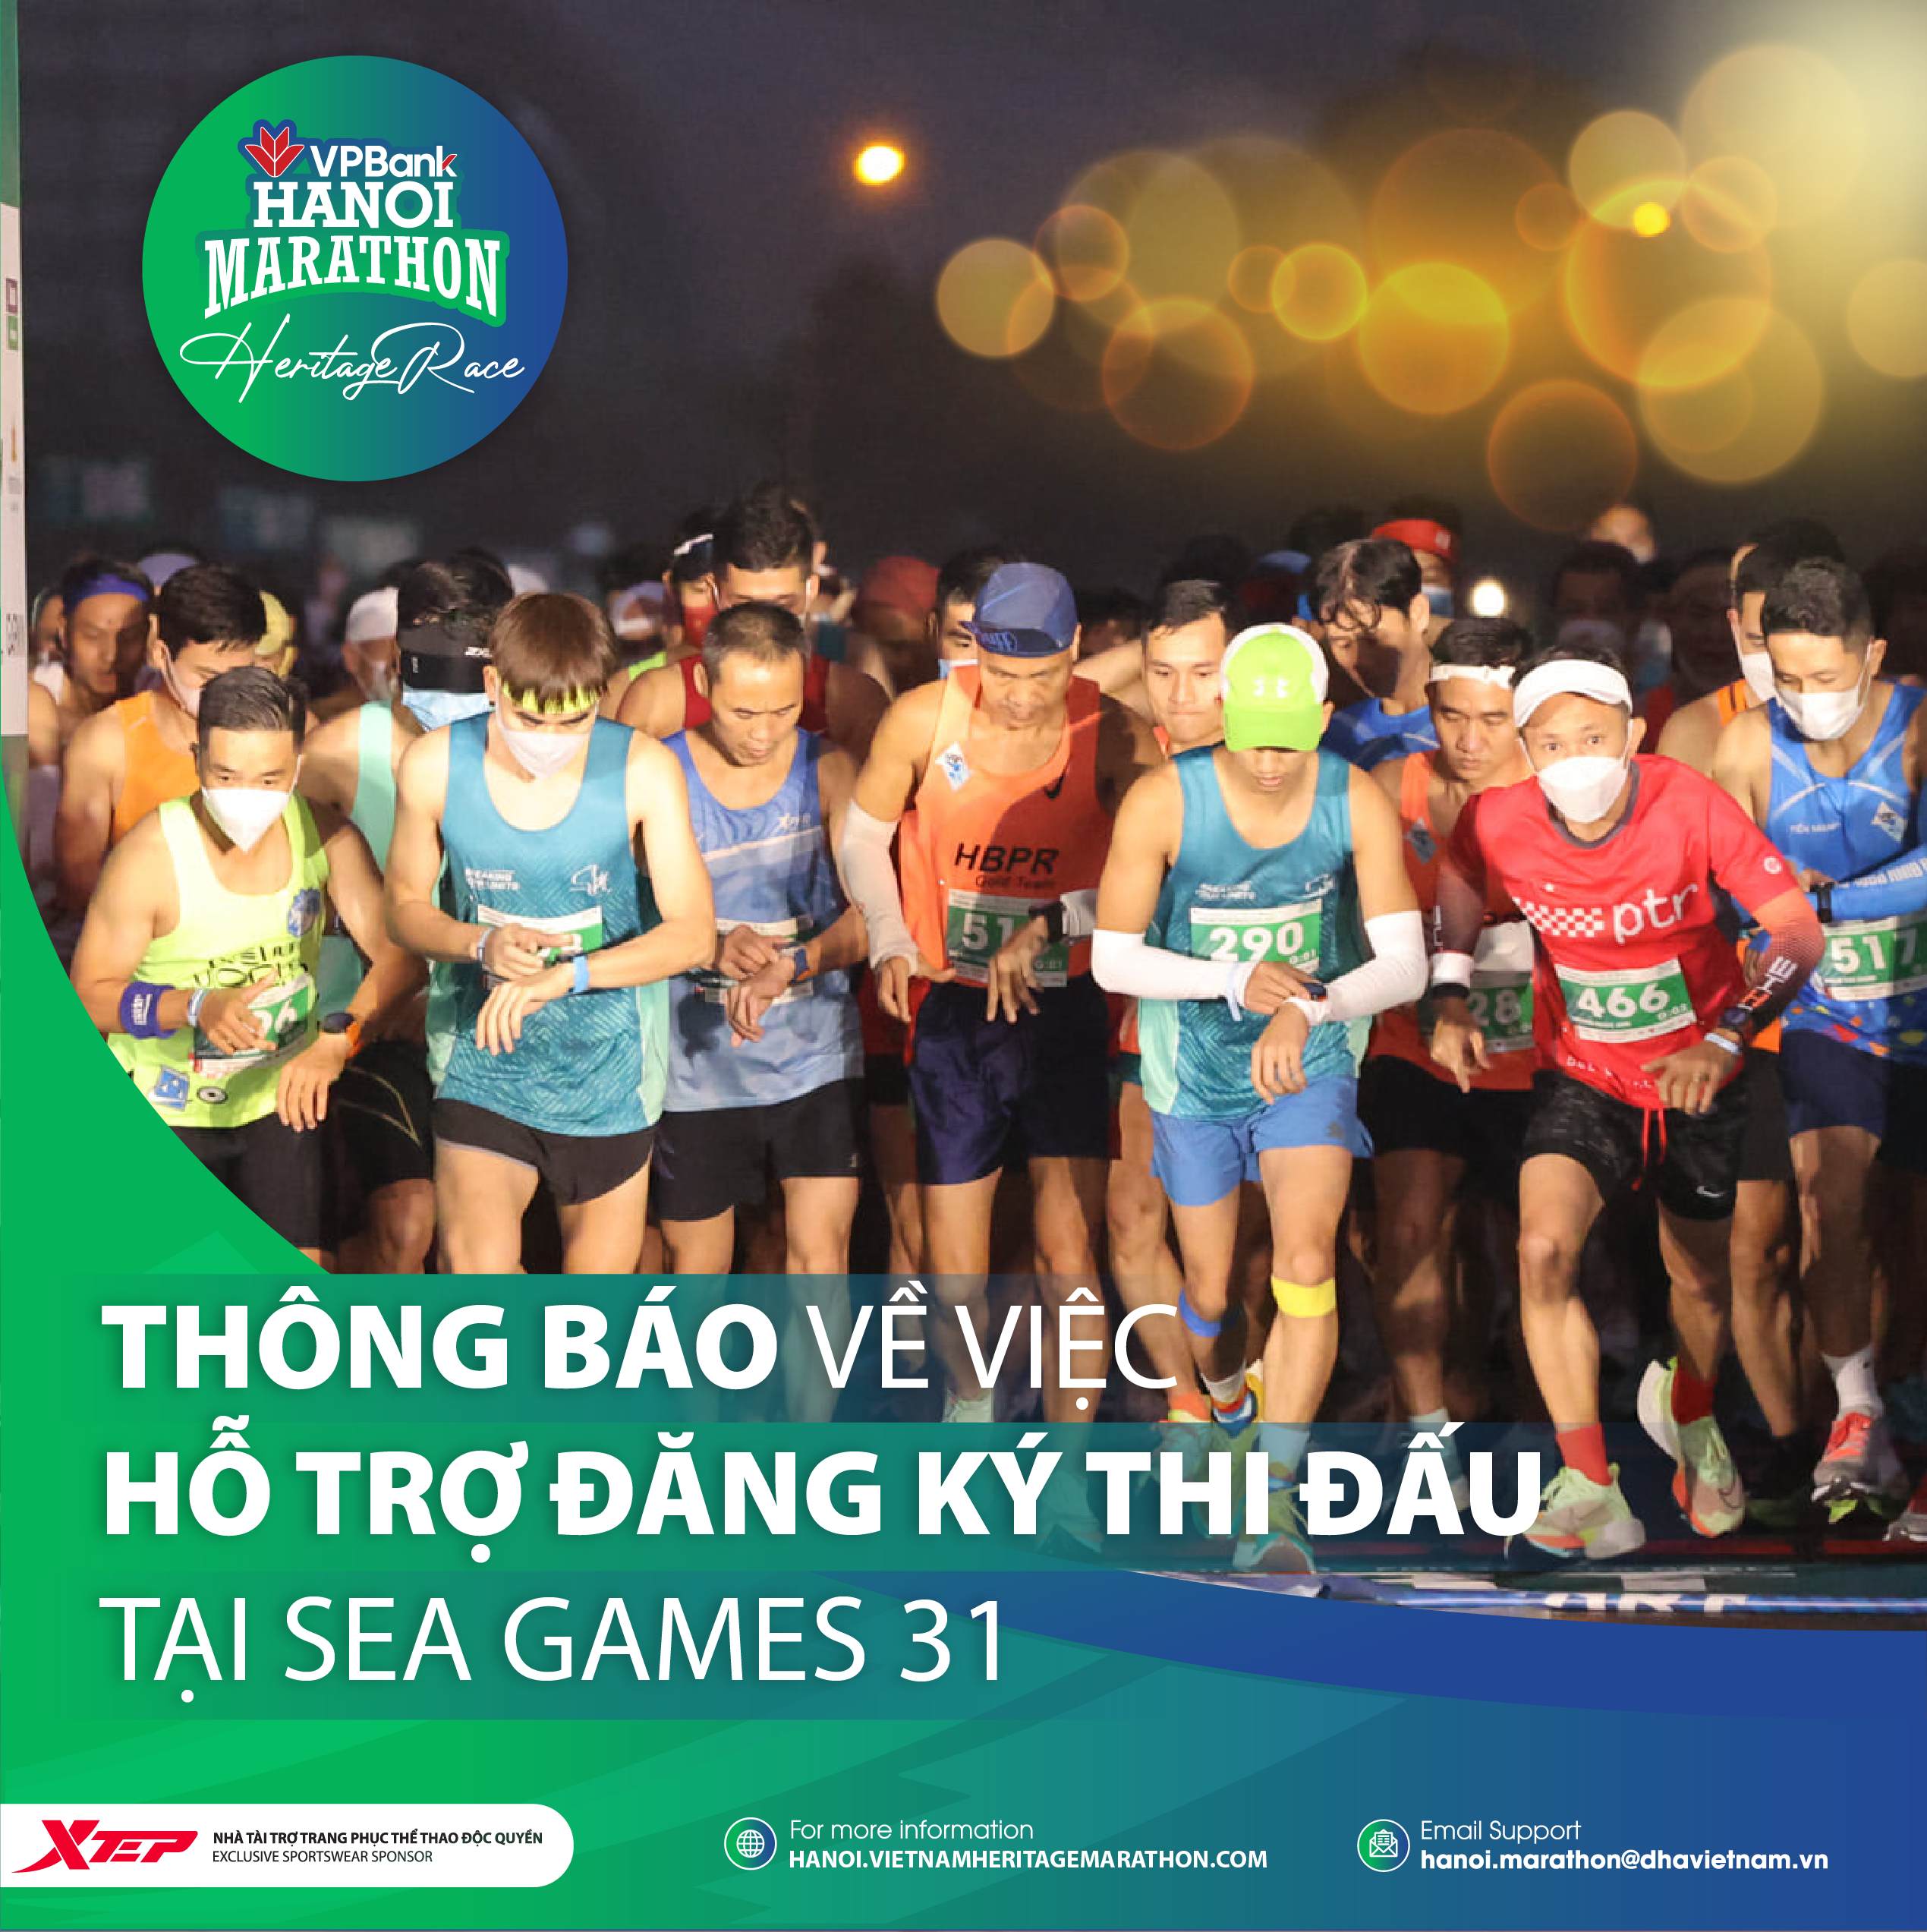 VPBank Hanoi Marathon To Assist SEA Games-Qualified Runners